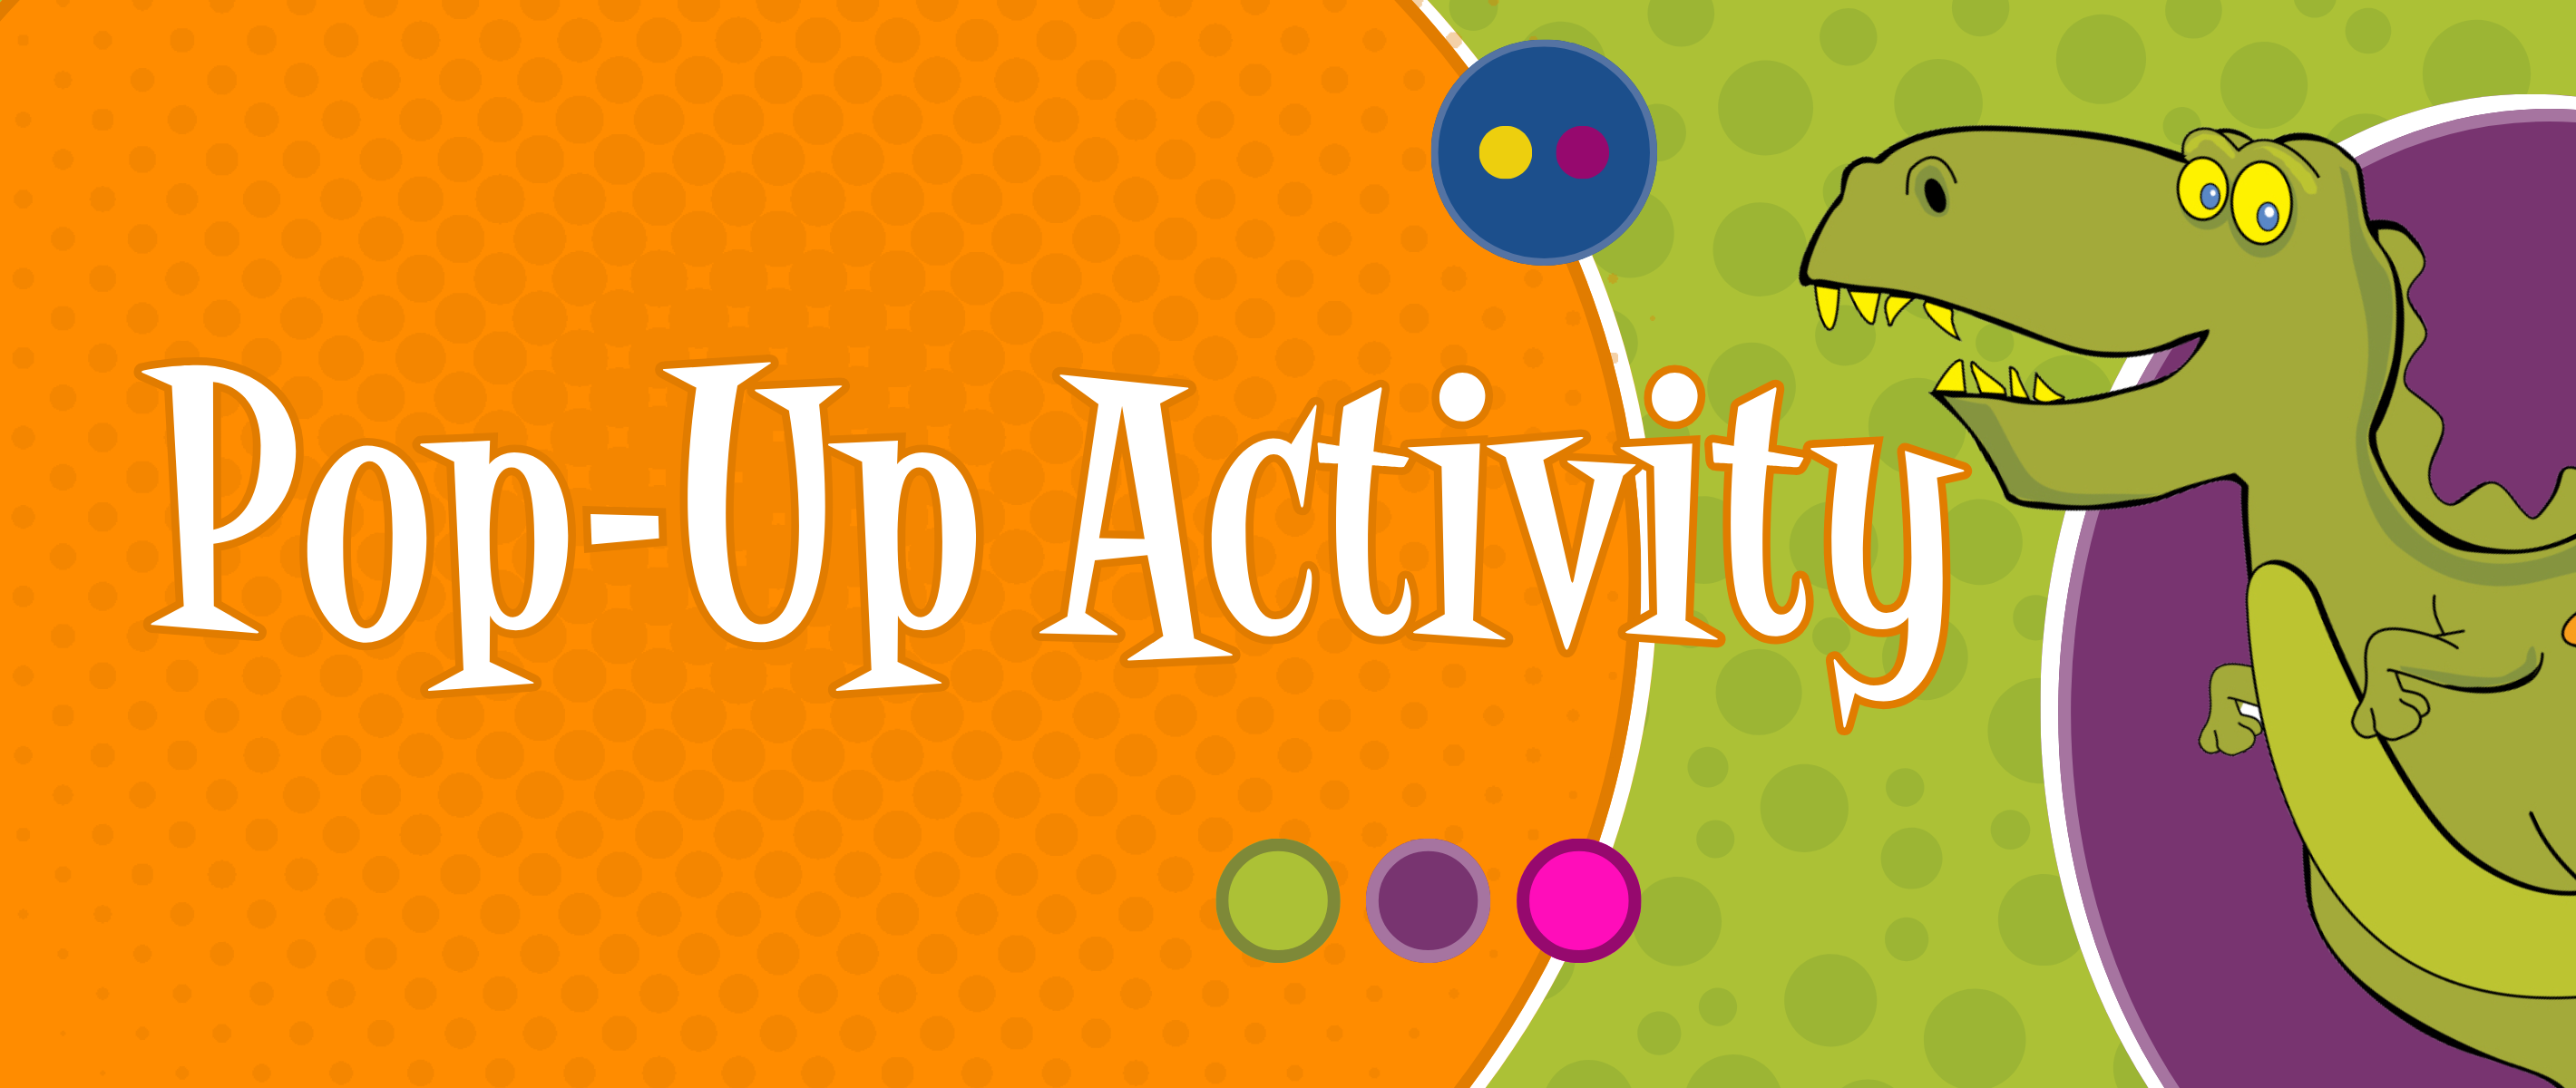 Weekly Pop-Up Activity